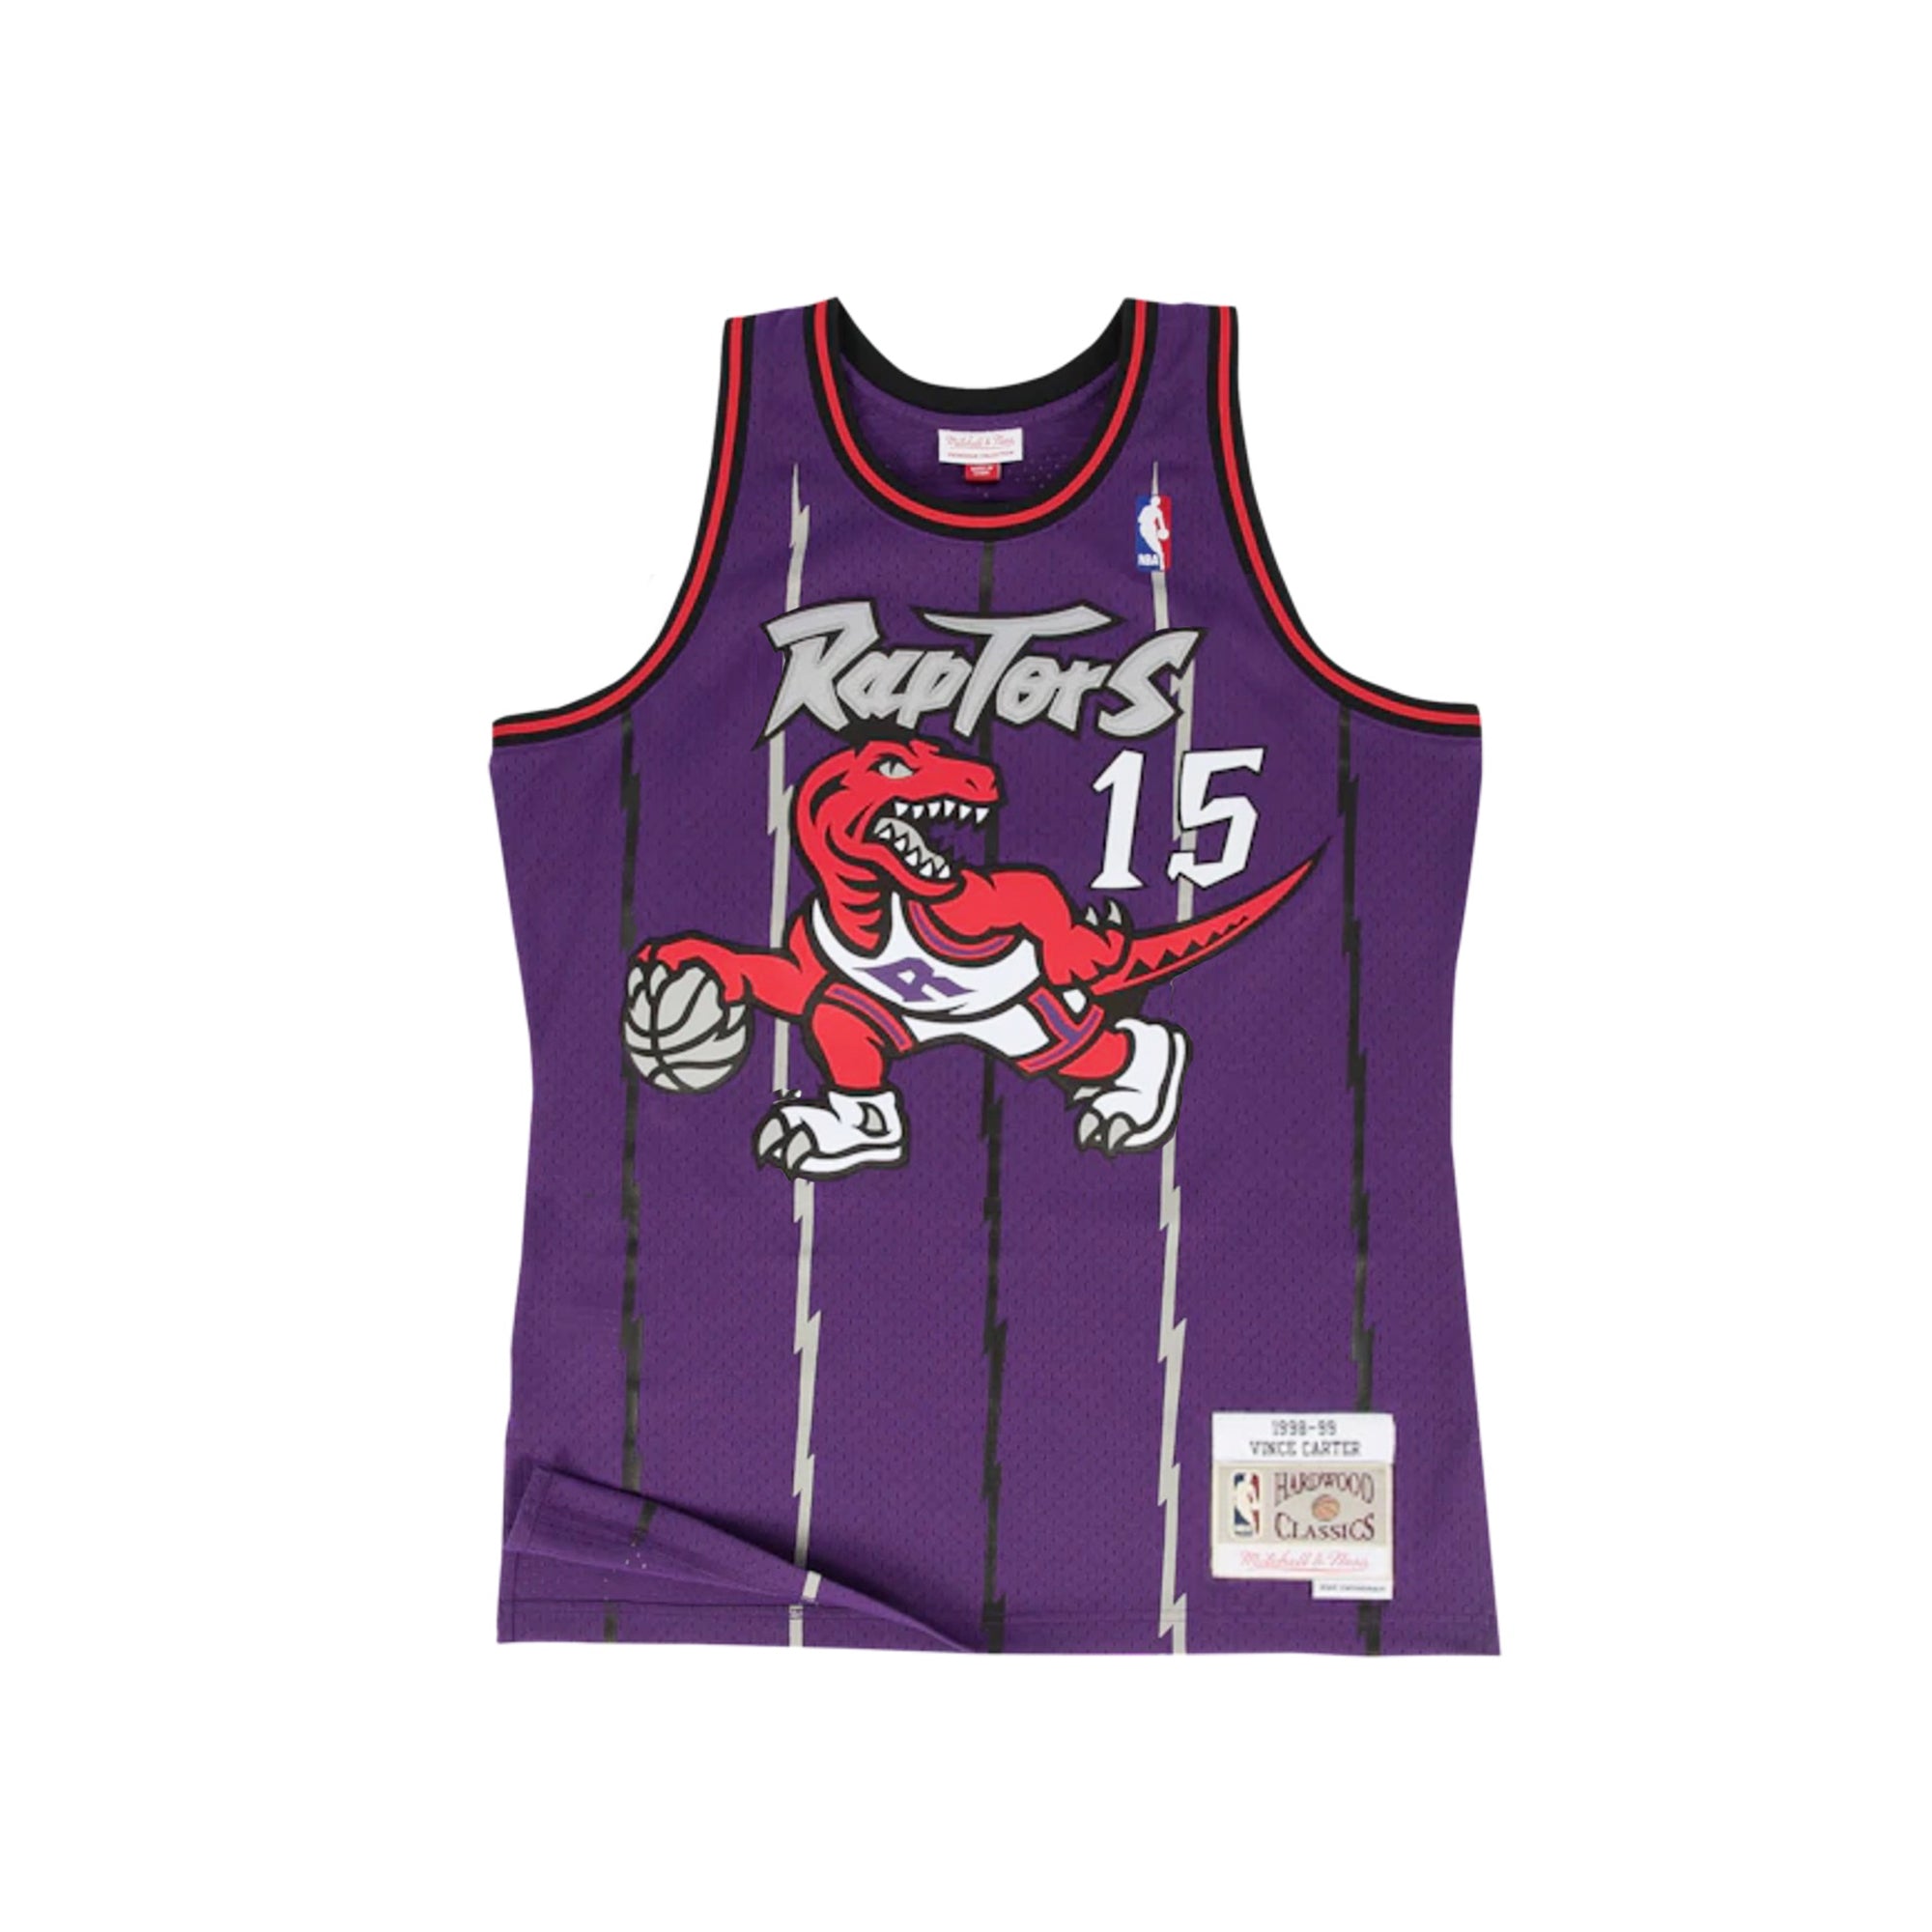 It's back! Raptors to wear purple throwback jerseys against Wizards -  Toronto